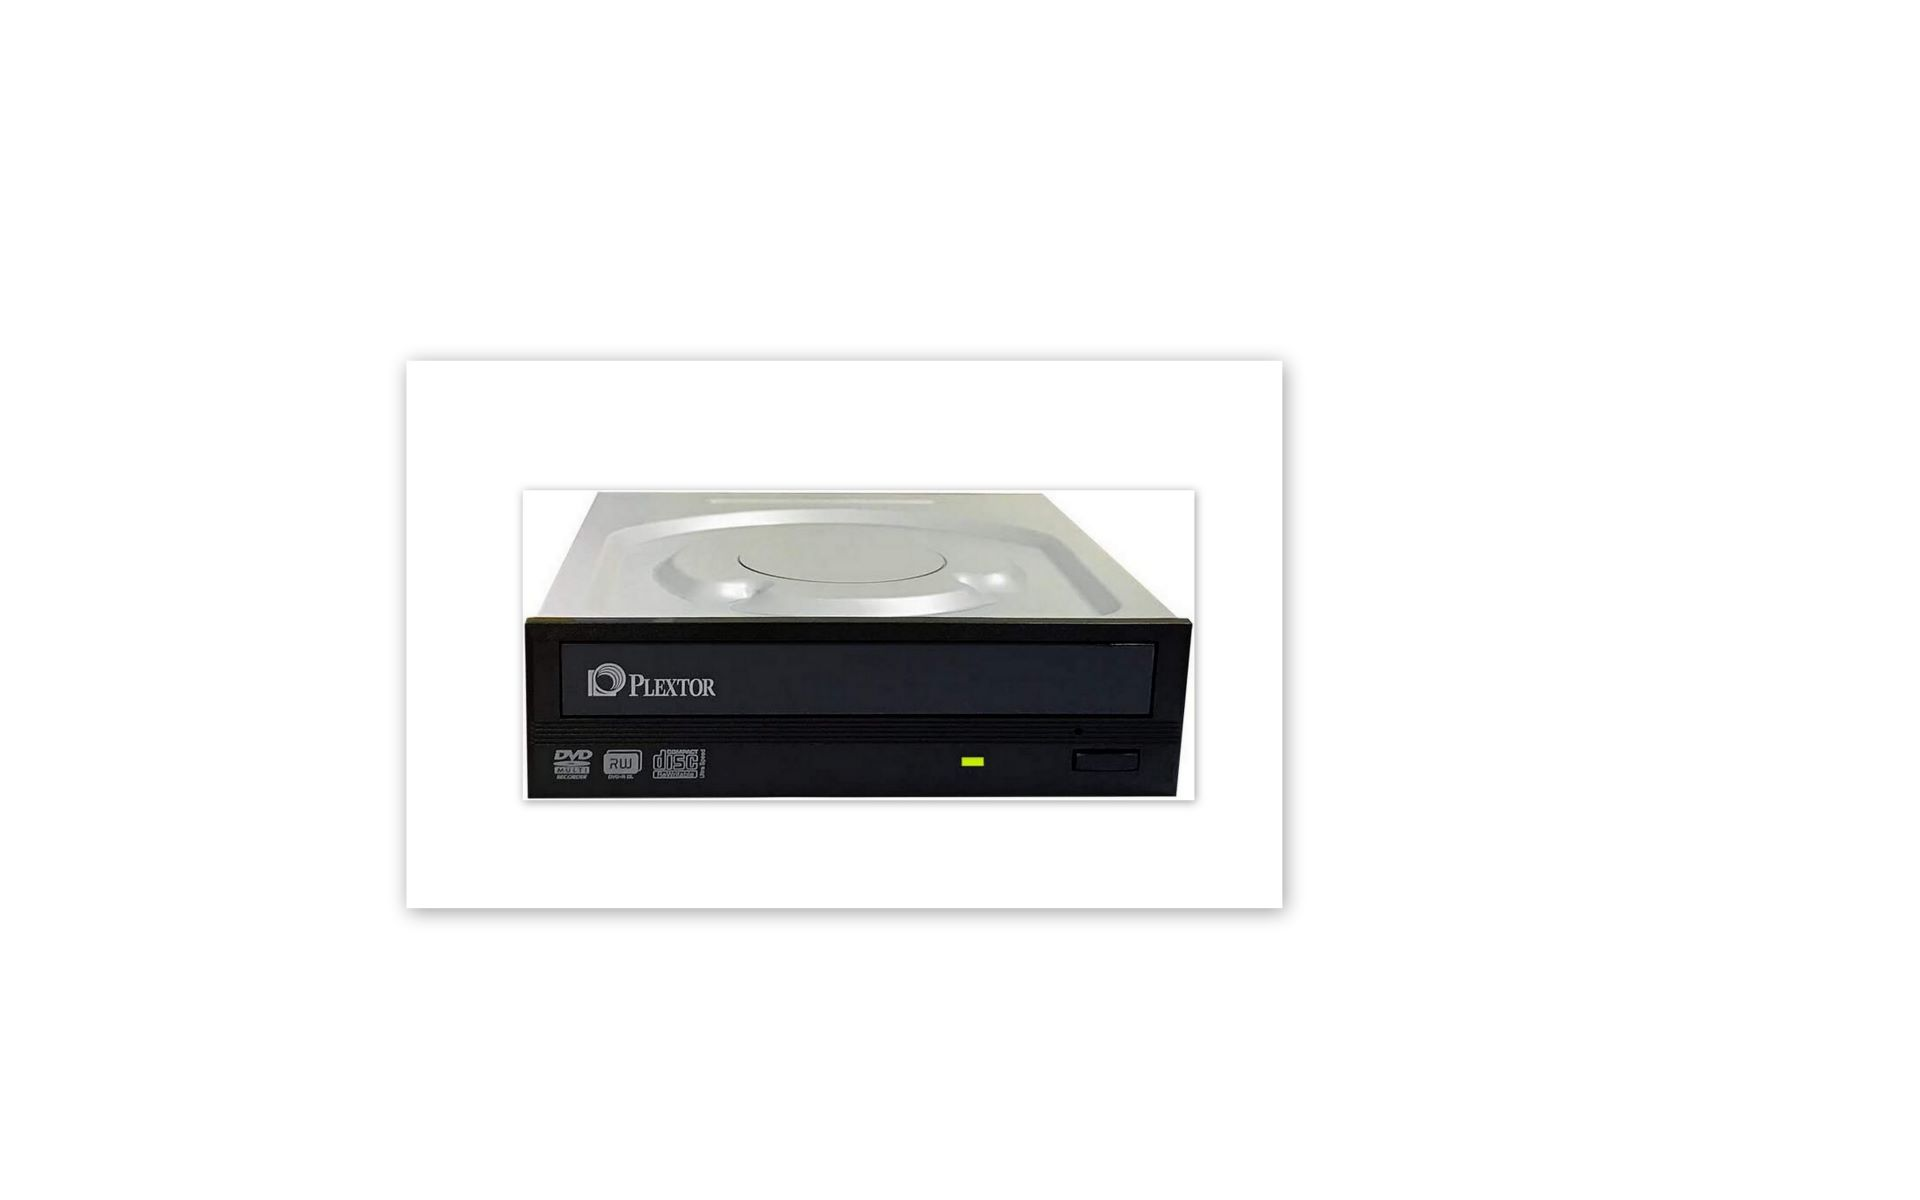 PX-891SAF DVD Brenner intern Plextor PIODATA